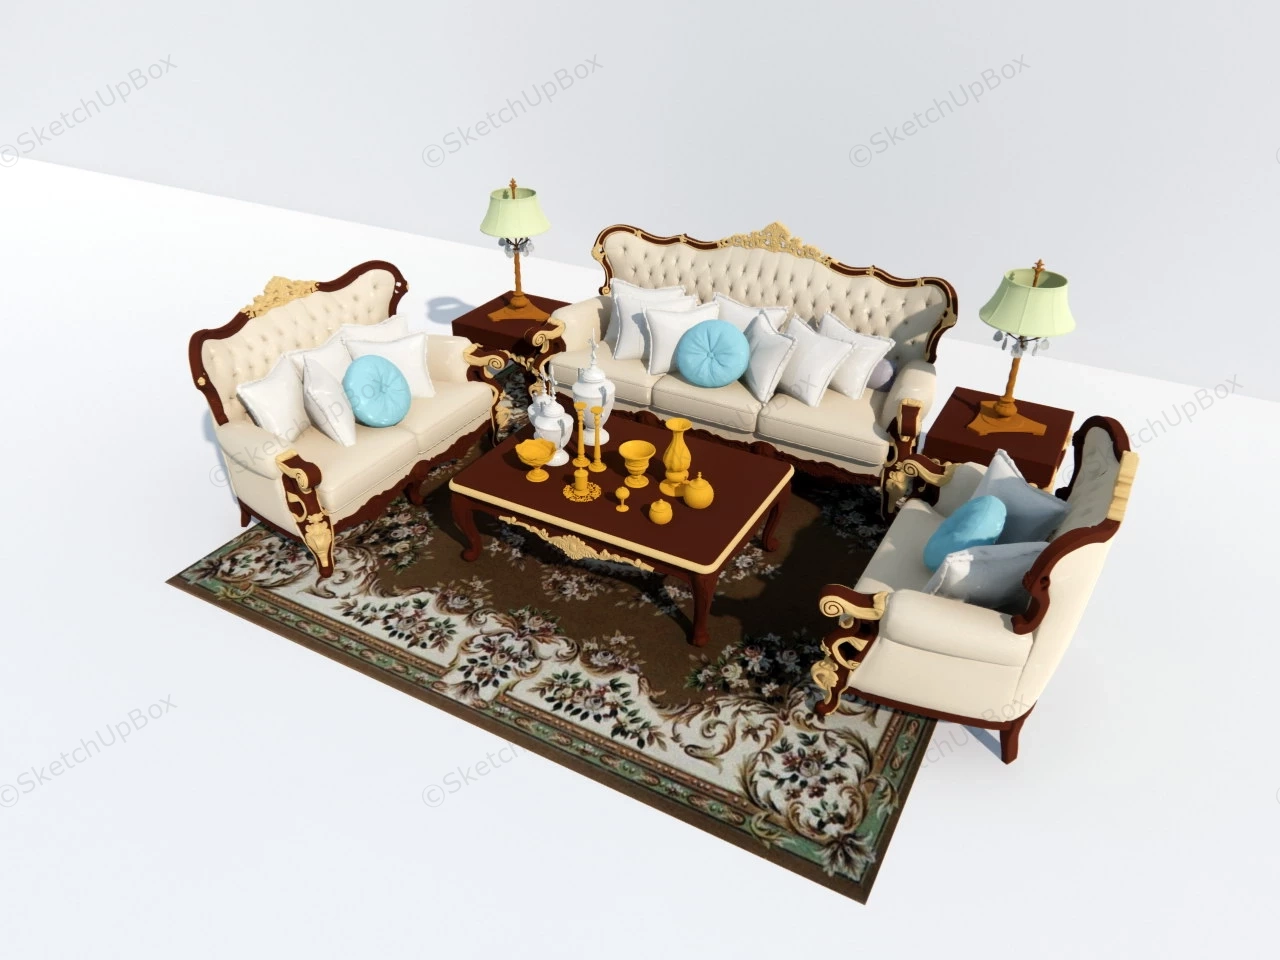 Victorian Living Room Furniture Set sketchup model preview - SketchupBox